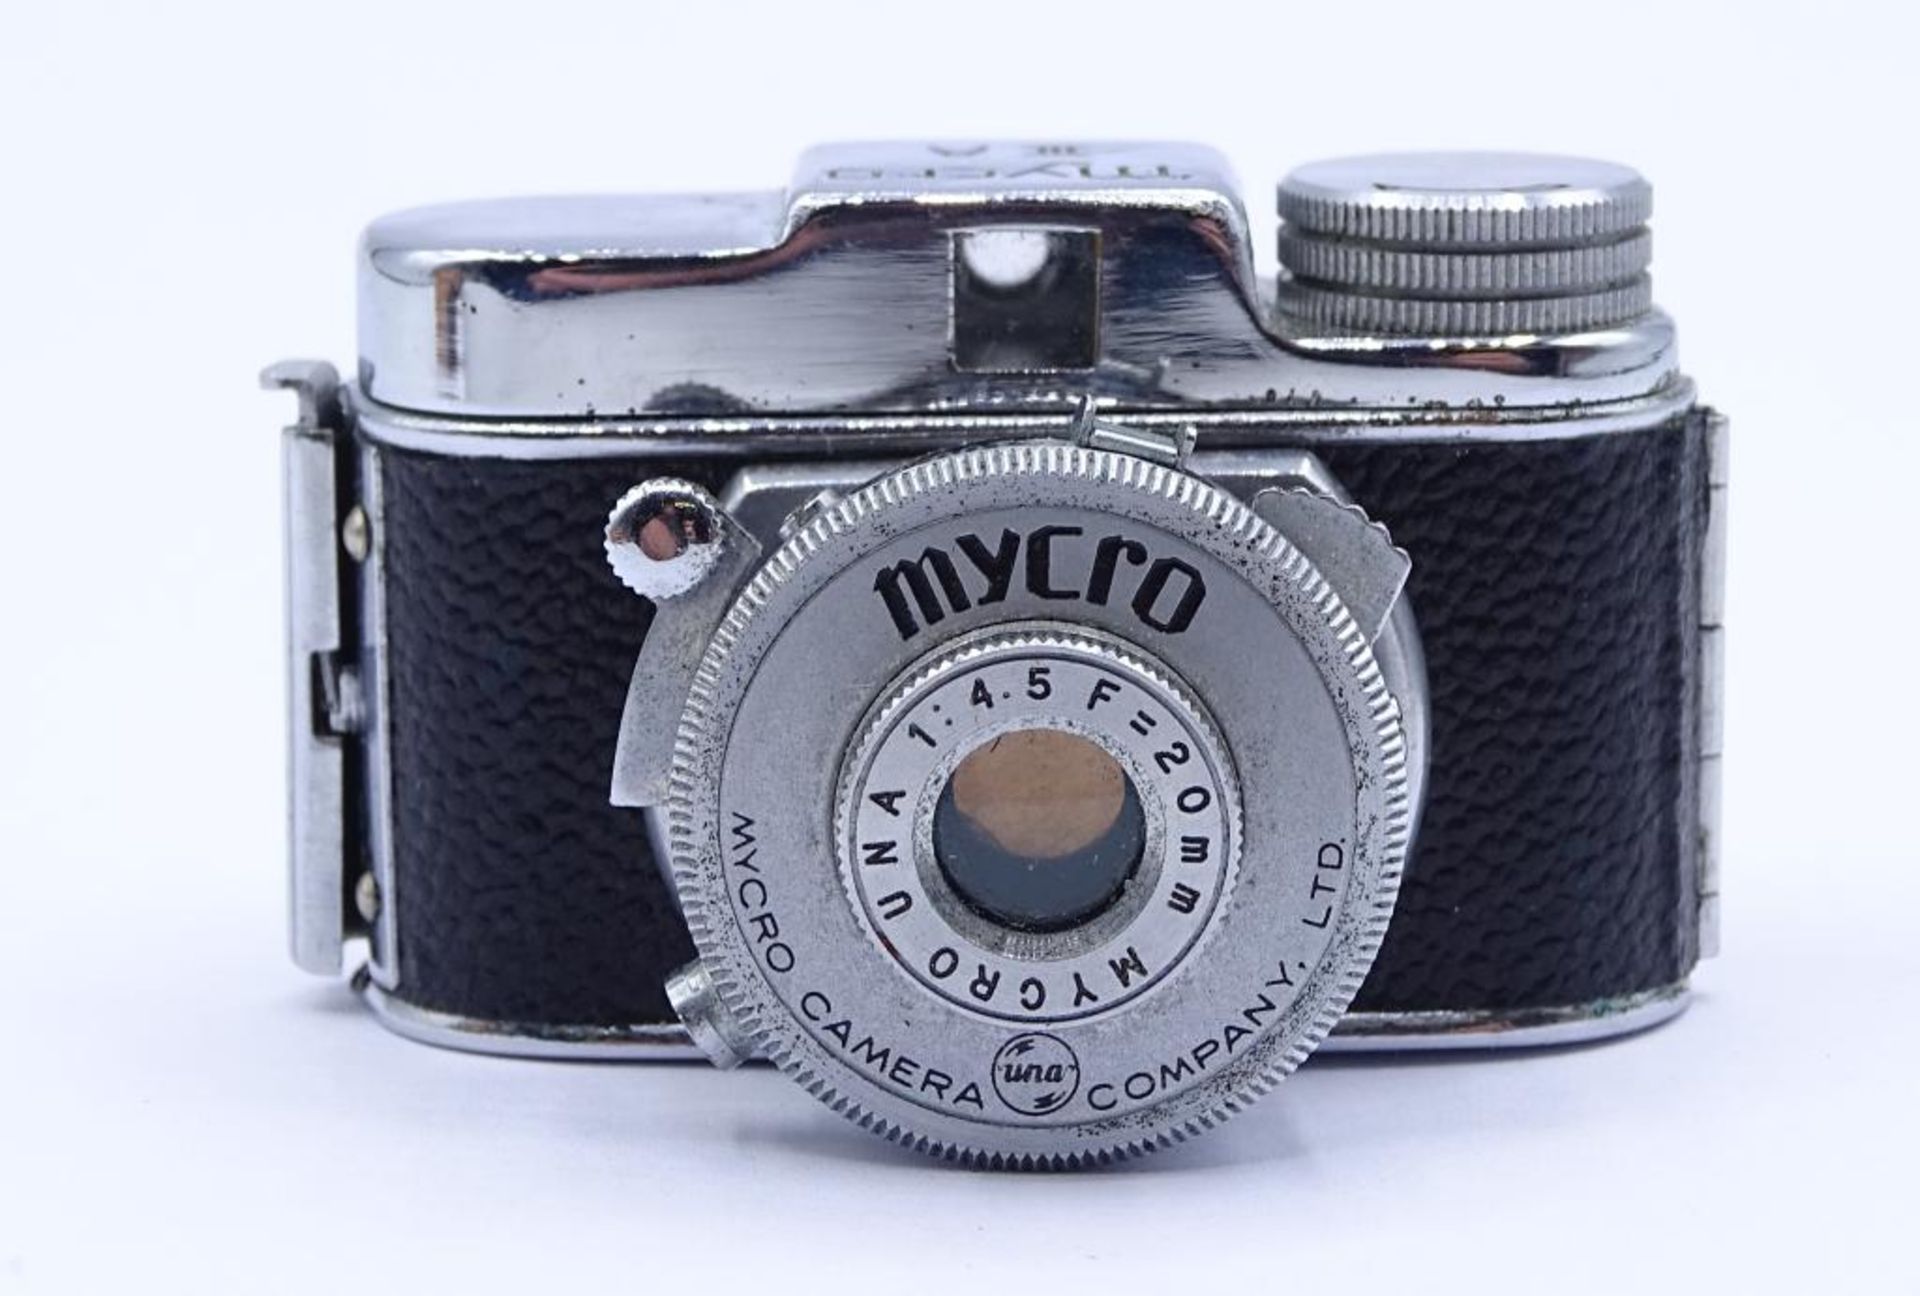 Mycro IIIA Miniatur Kamera in orig. Ledertasche, ca. 3x6 cm, gut erhalten - Bild 2 aus 4